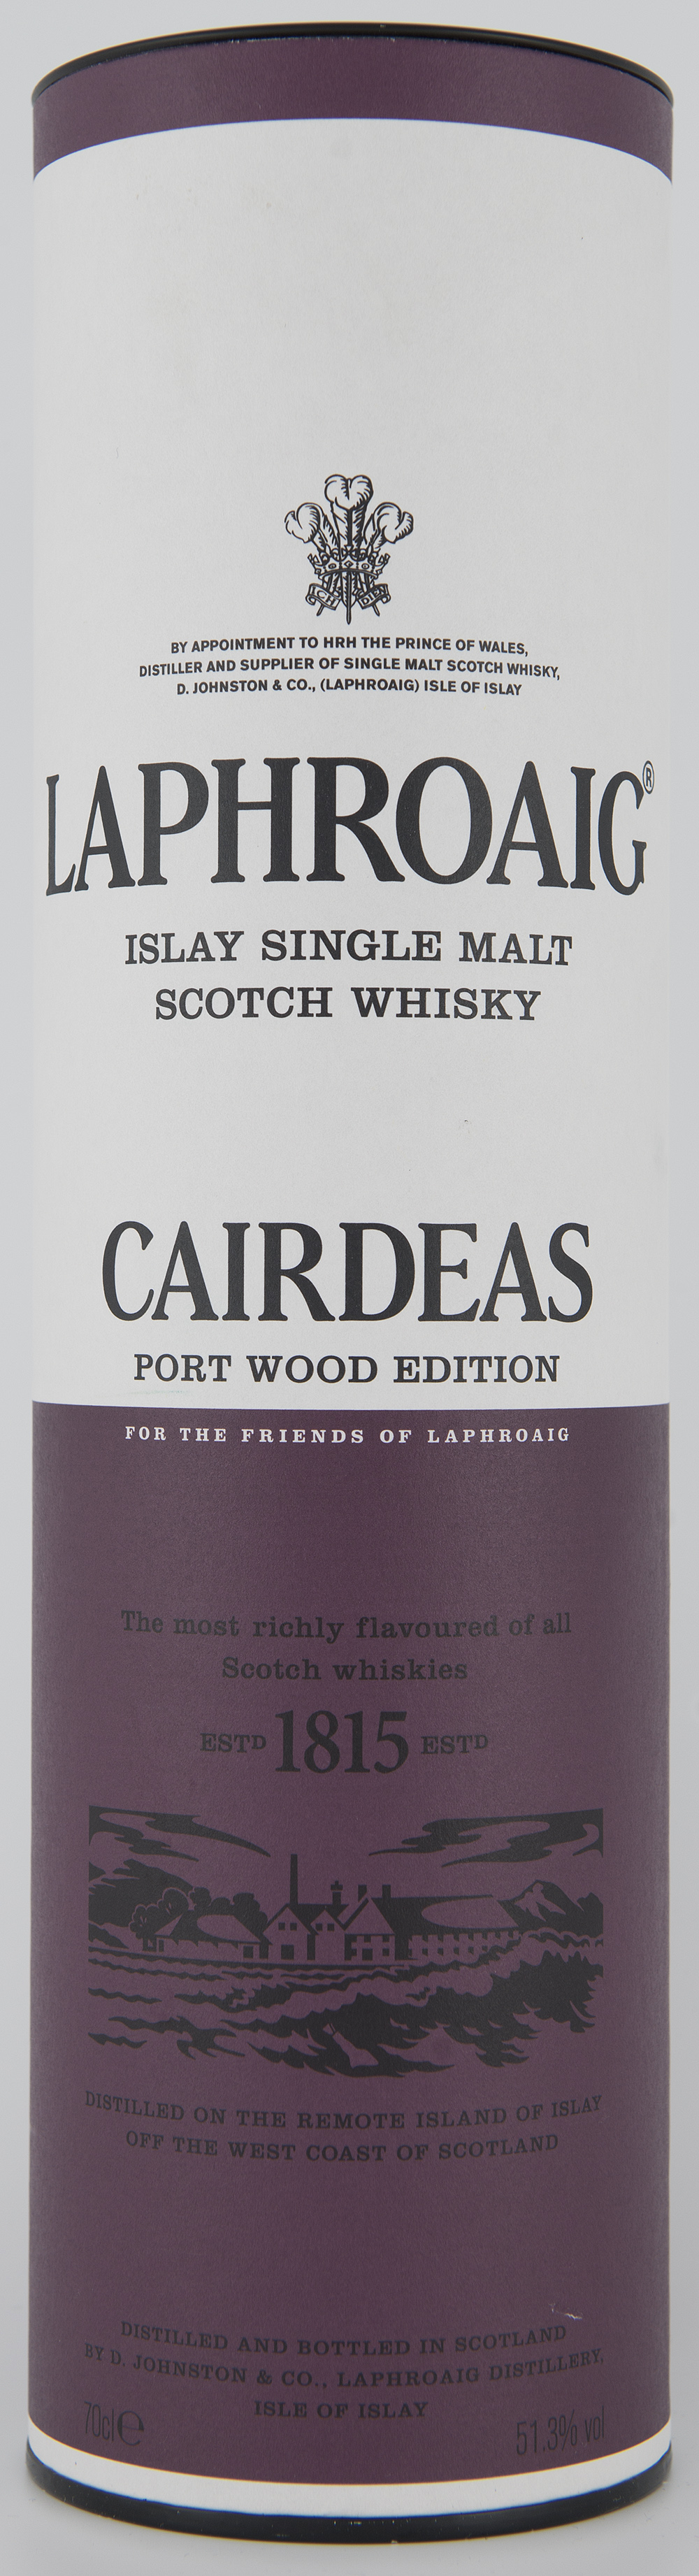 Billede: DSC_3216 Laphroaig Cairdeas Port Wood Edition (Feis Isle 2013) - tube front.jpg